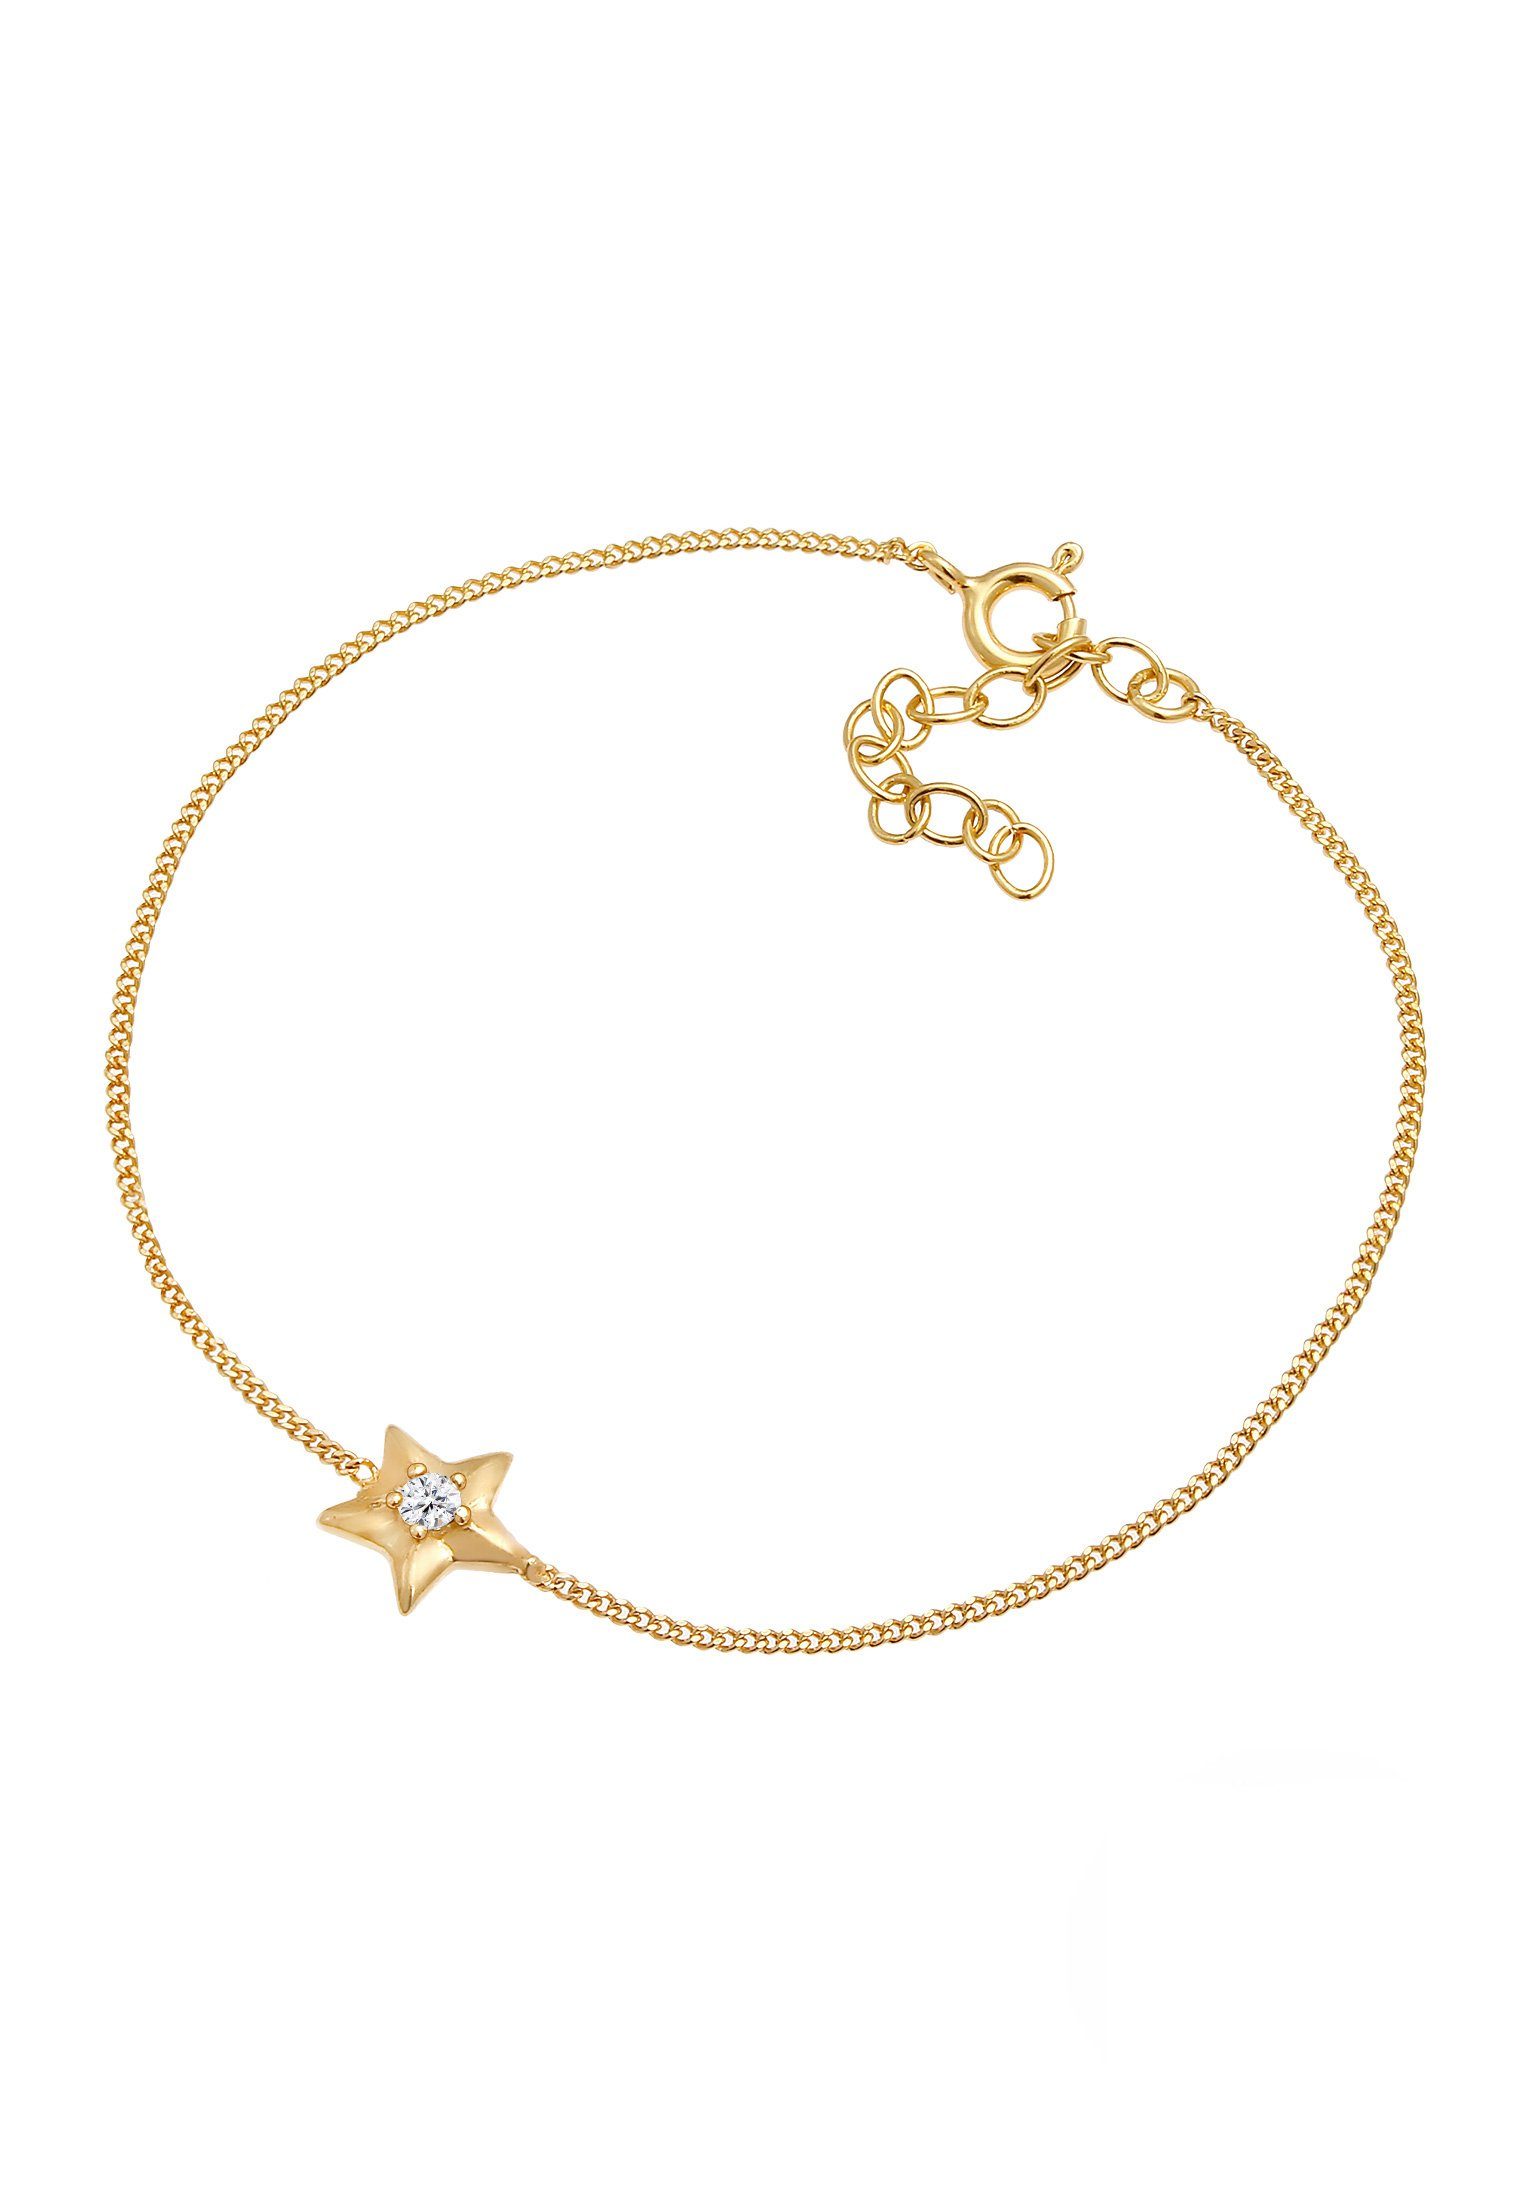 Star Kristalle Astro Armband Gold 925 Stern Silber, Elli